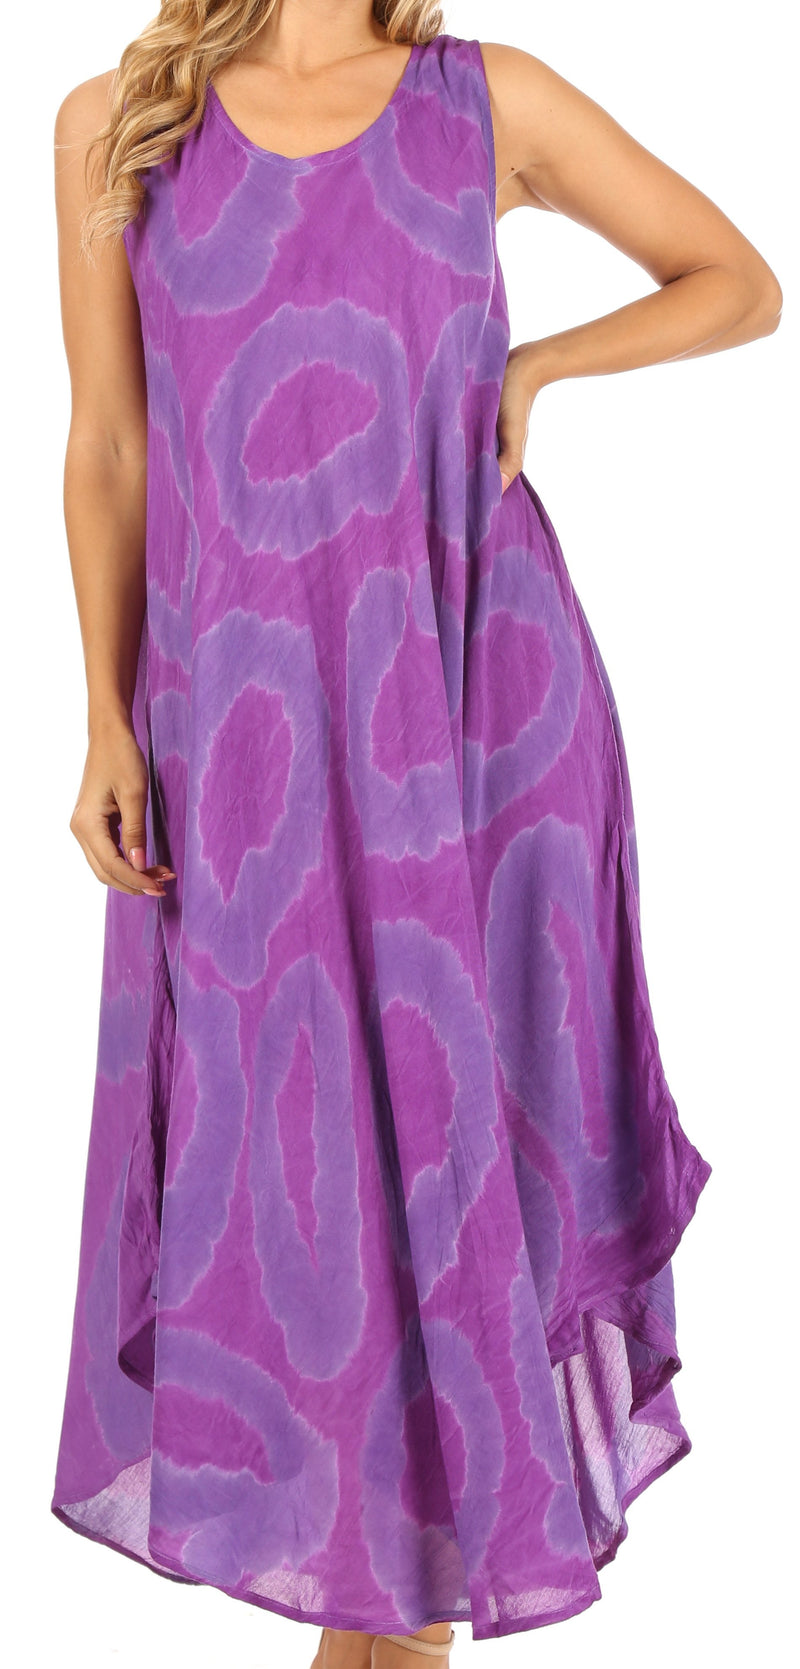 Sakkas Rocio Women's Sleeveless Caftan Beach Cover up Dress Casual Relaxed Tie dye